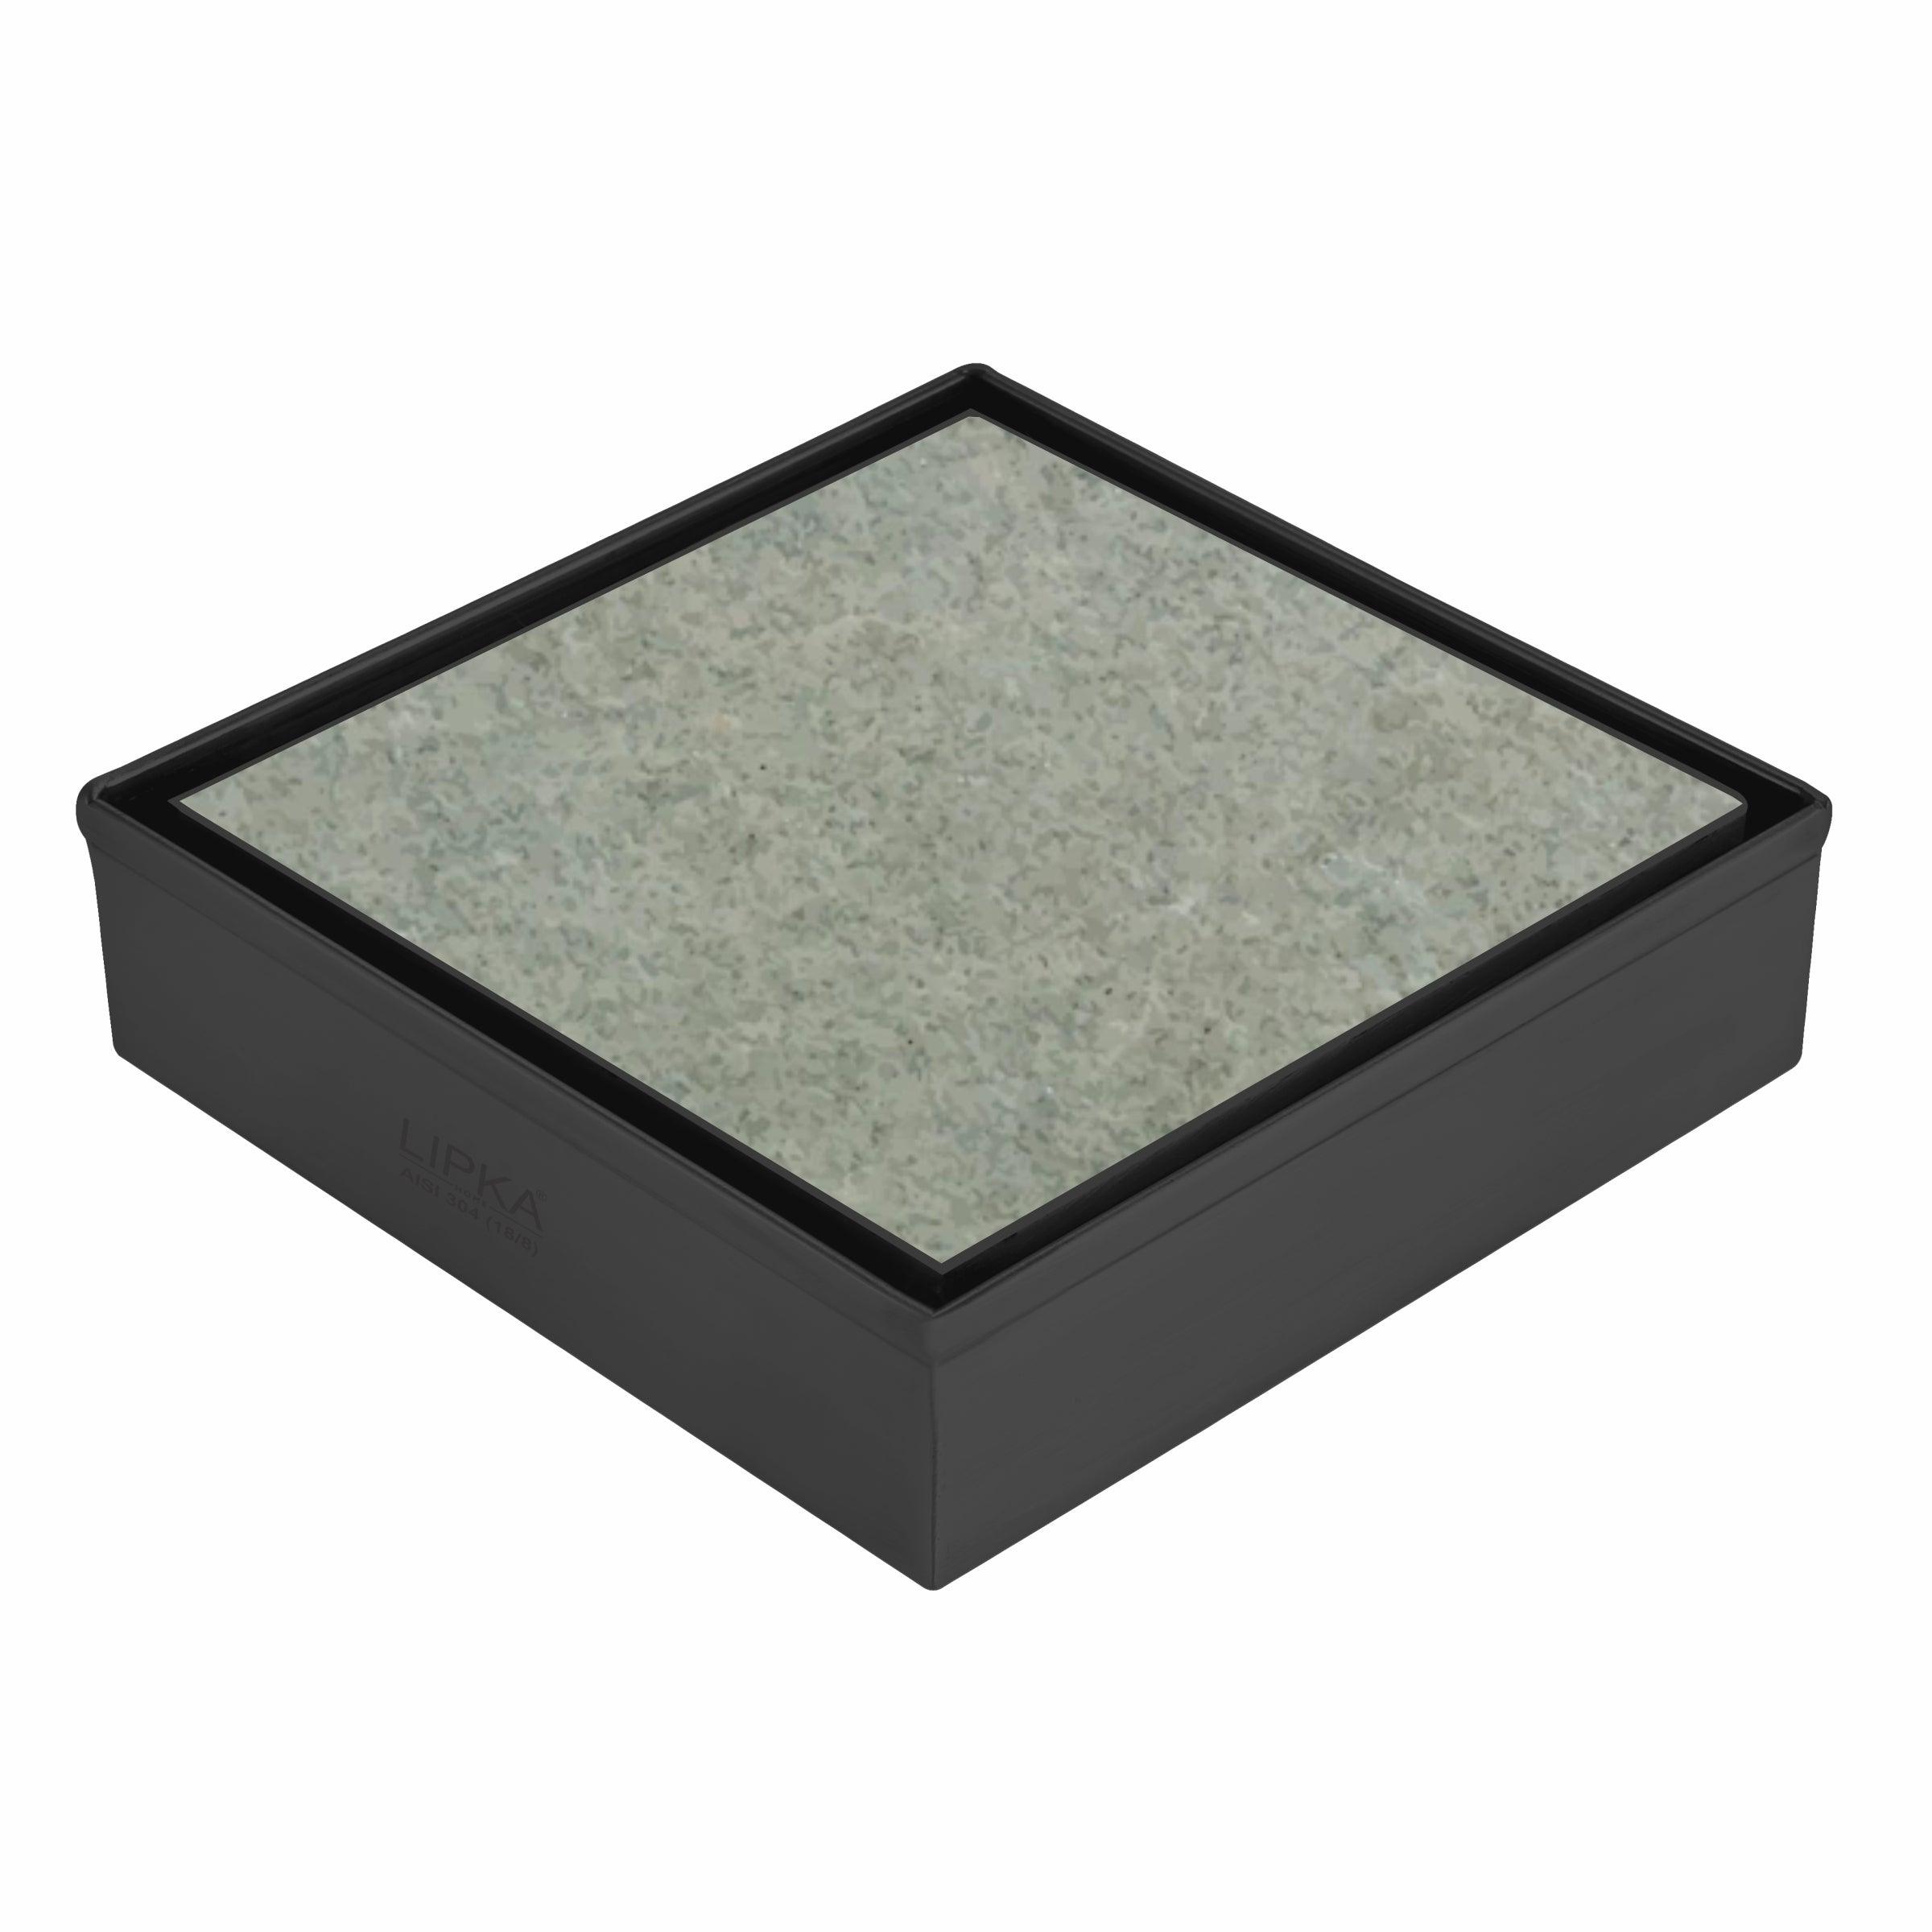 Marble Insert Square Floor Drain - Black (5 x 5 Inches)